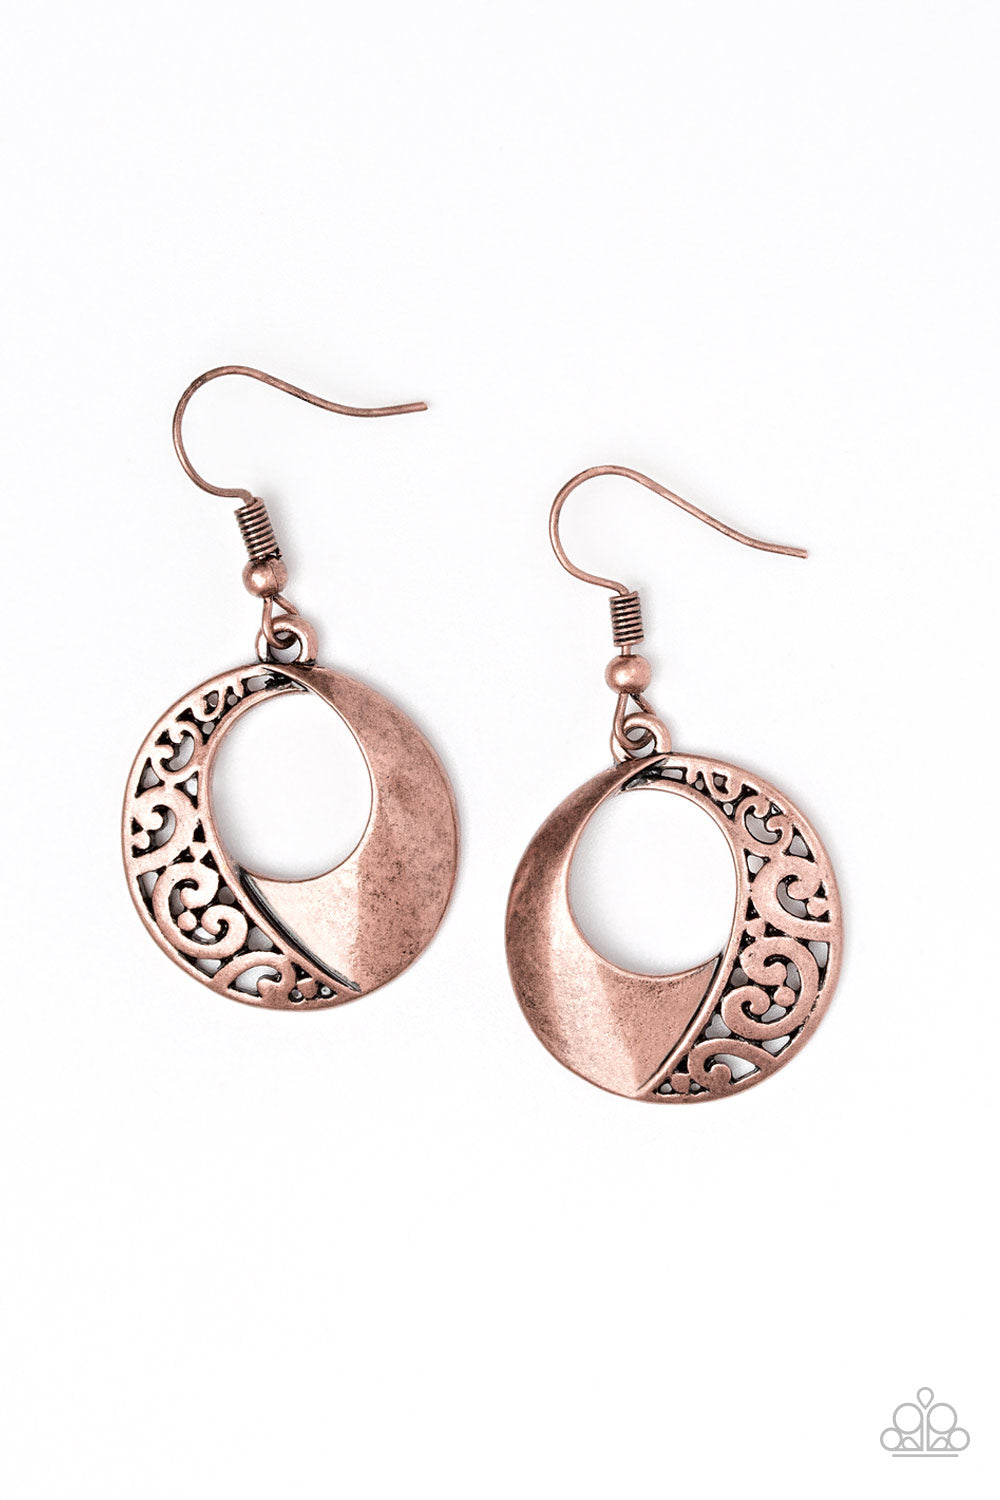 Eastside Excursionist - copper - Paparazzi earrings